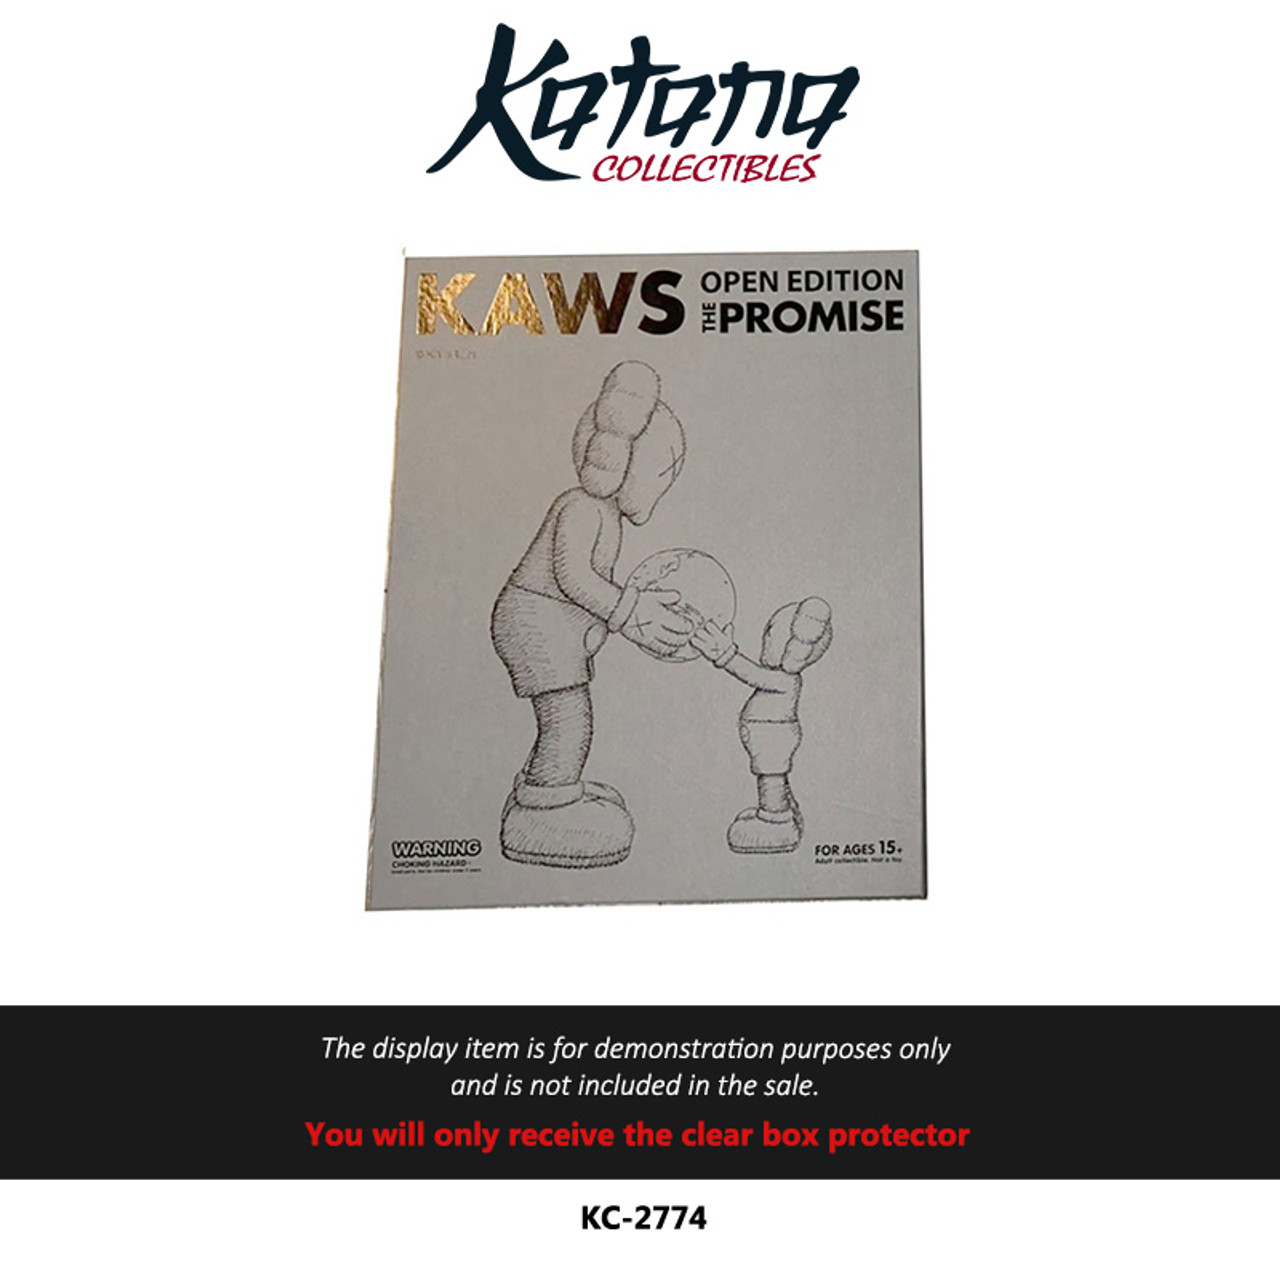 Katana Collectibles Protector For Kaws The Promise